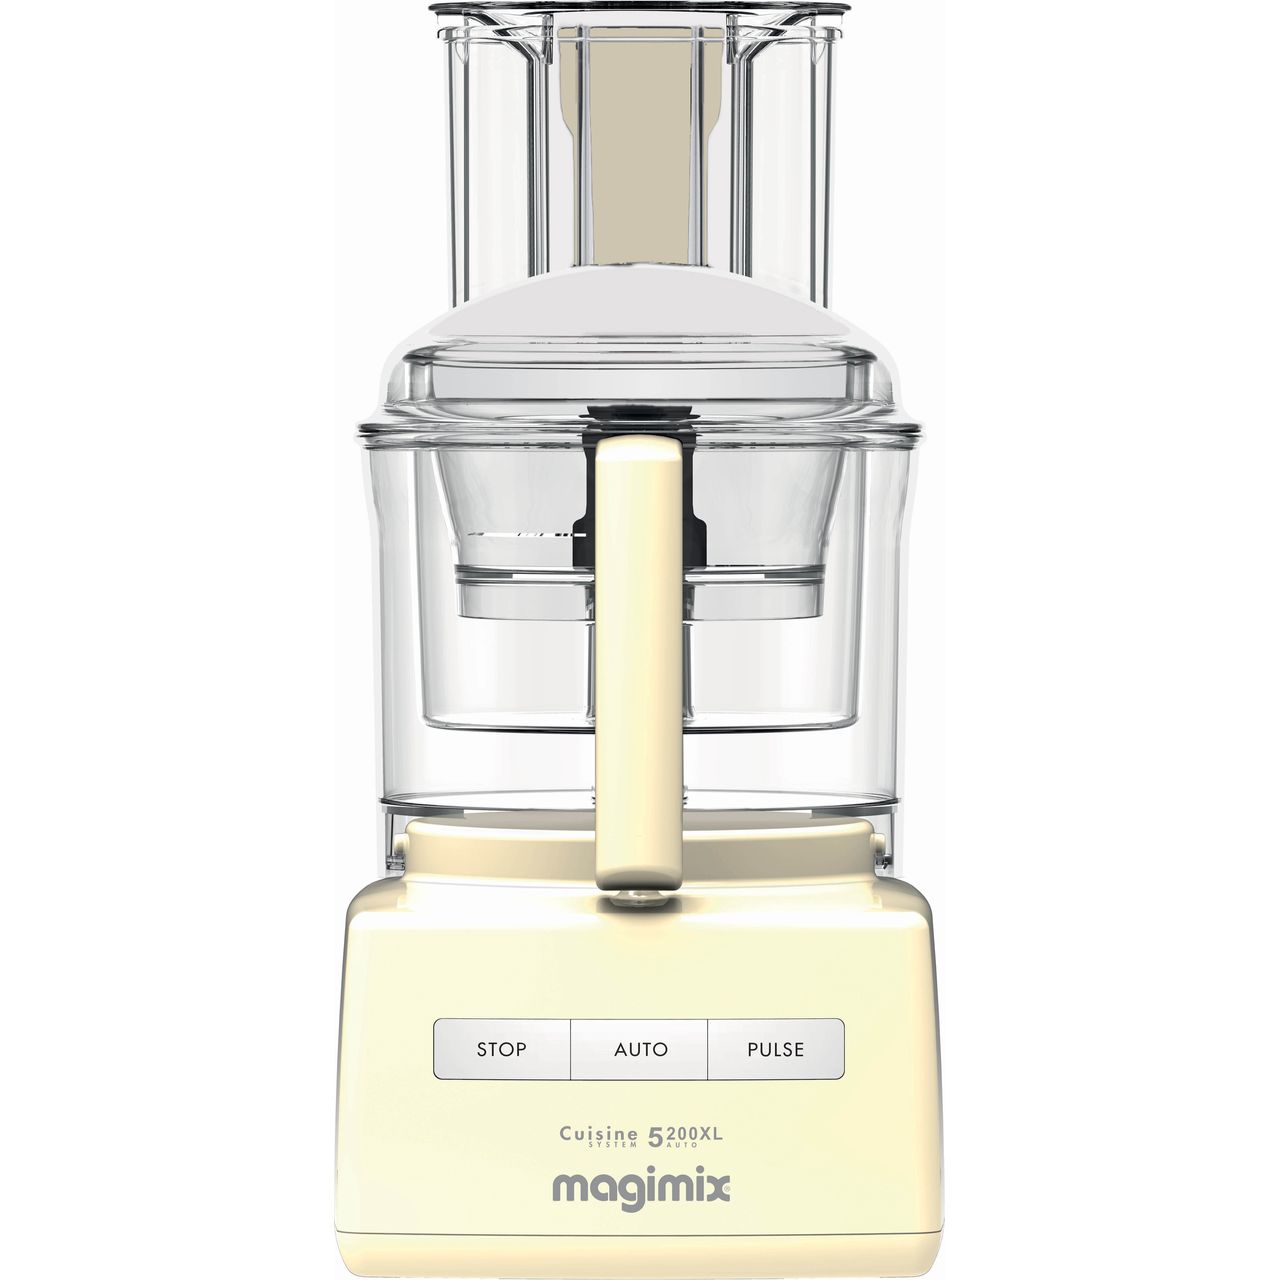 Magimix 5200XL Premium 18701 3.6 Litre Food Processor With 12 Accessories Review